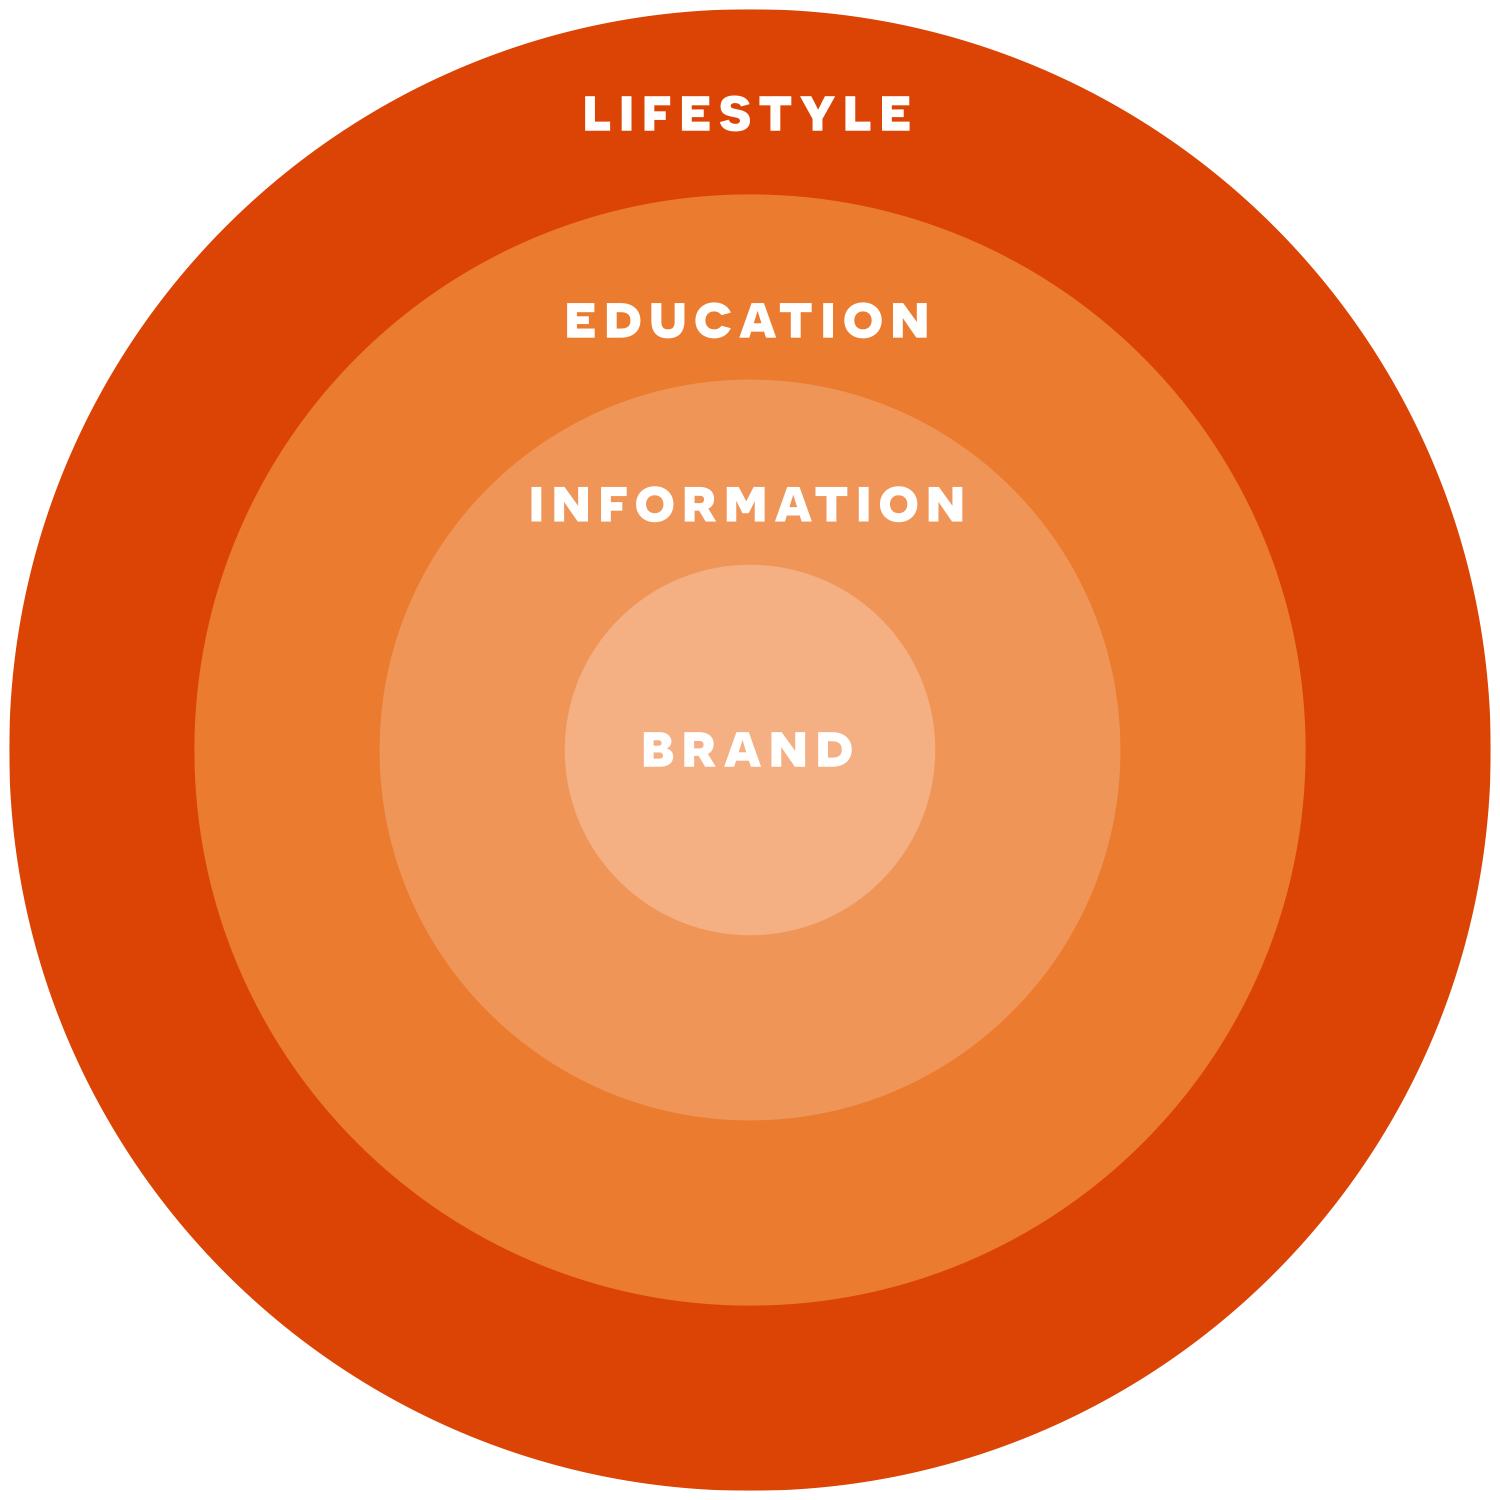 Lifestyle Education Information Brand